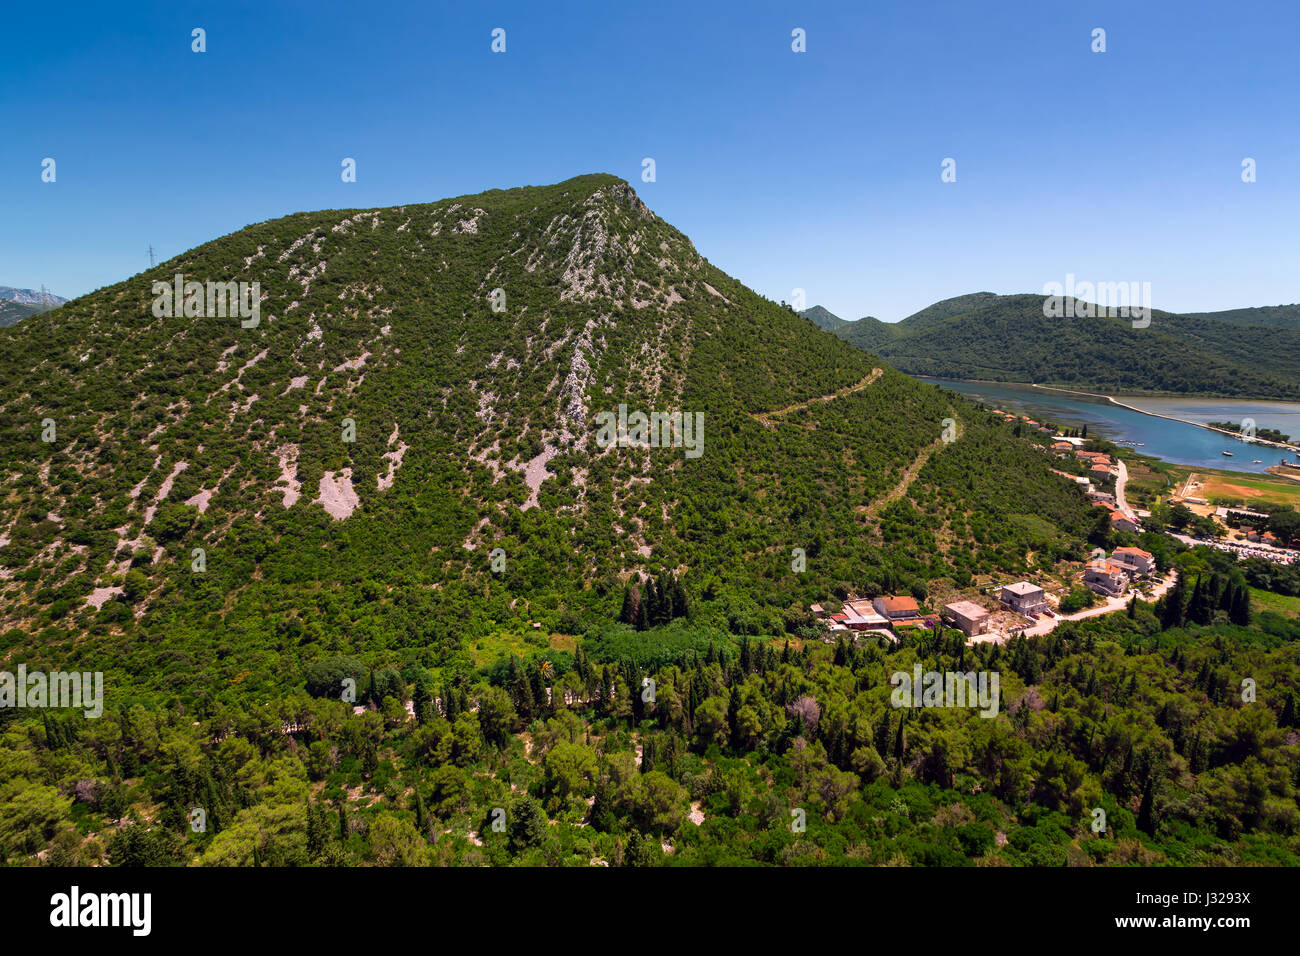 Aerial View of Ston and Surrounding Hills, Dalmatia, Croatia Stock Photo